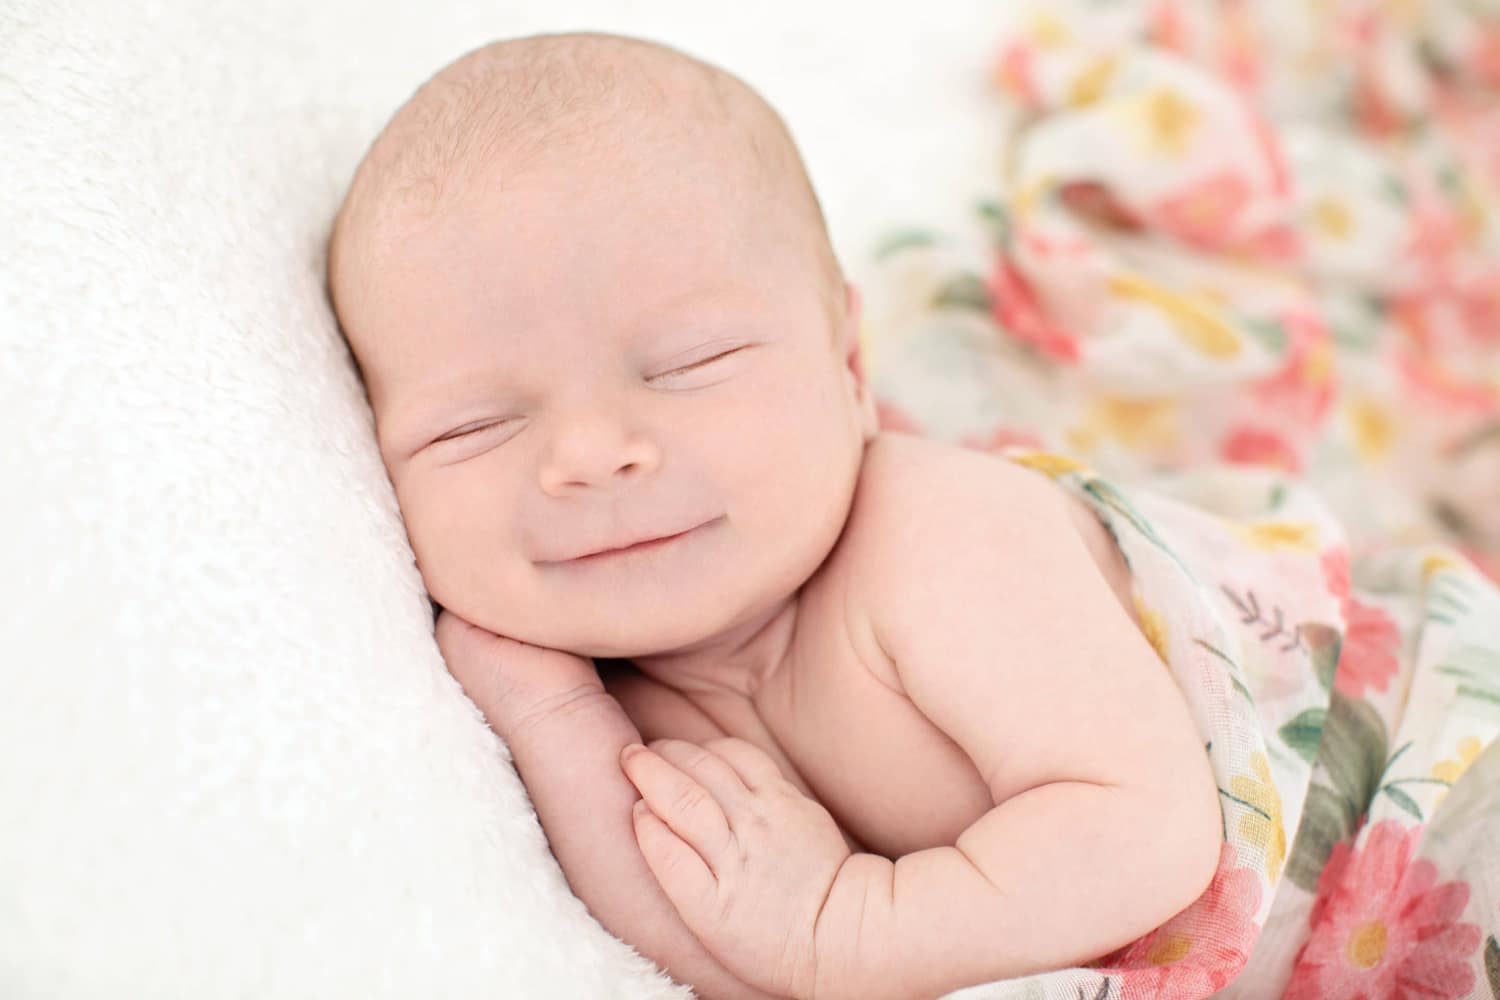 A newborn baby smiles in a portrait.